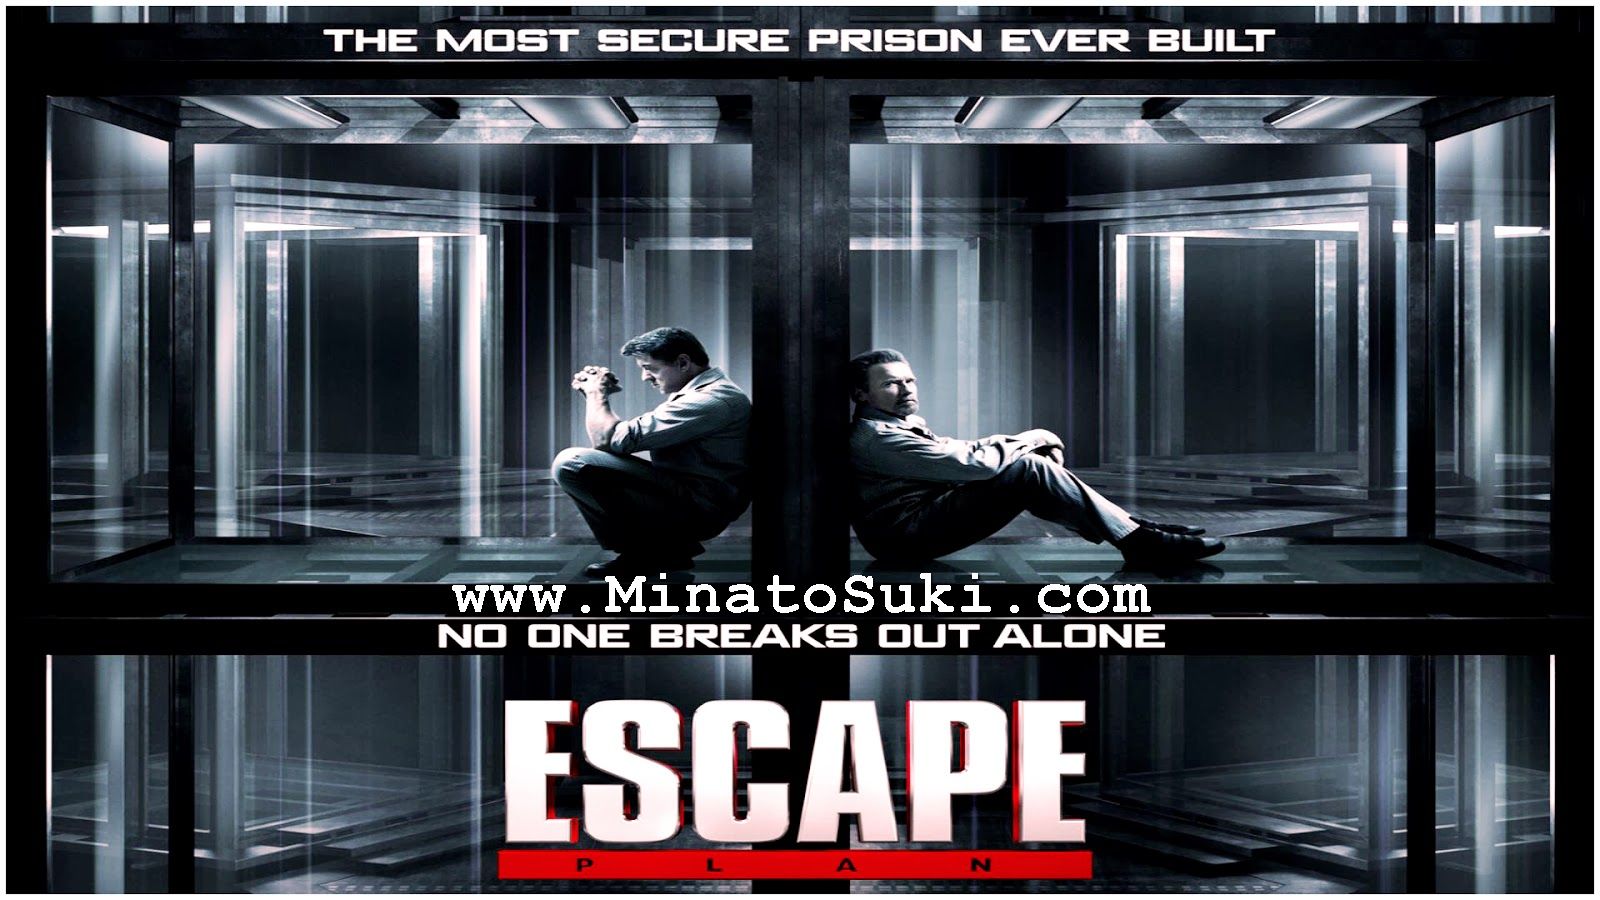 Escape Plan Movie 3gp mp4 avi subtitle indonesia brrip bluray dvd